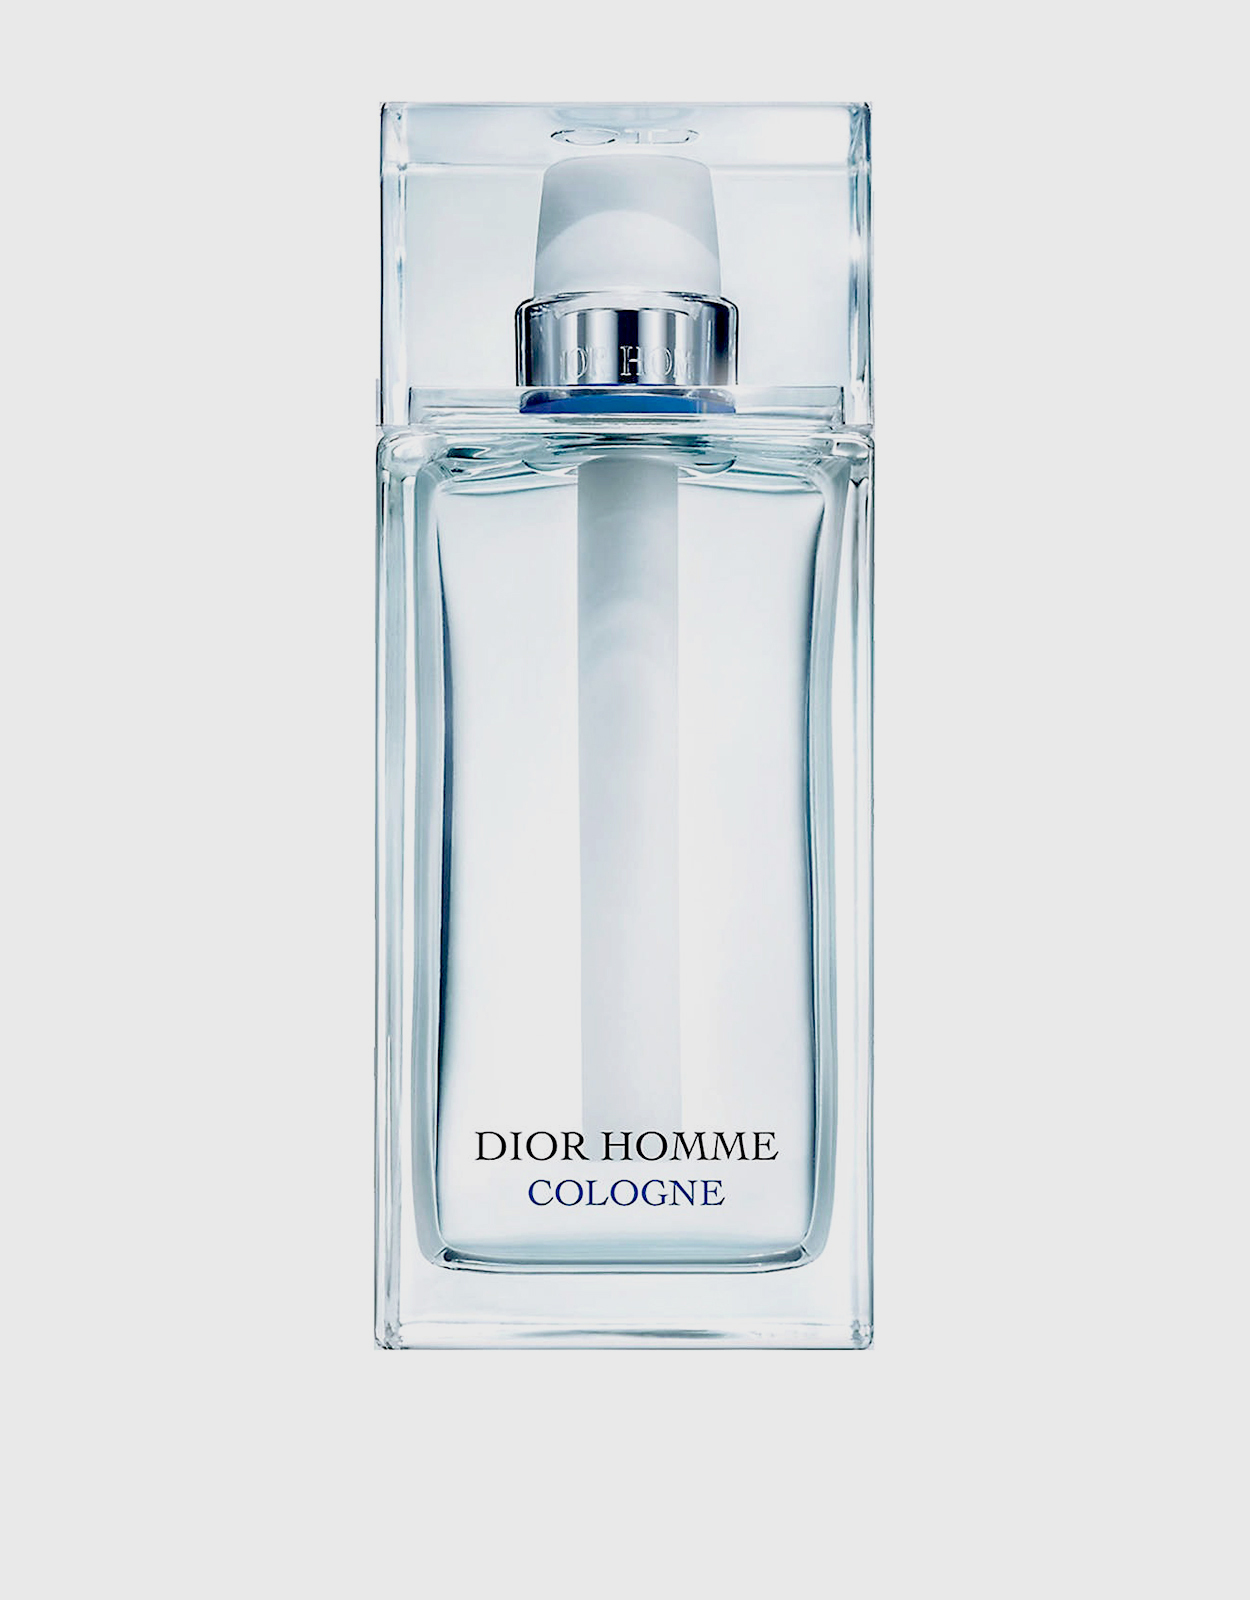 Cologne туалетная вода. Christian Dior homme Cologne. Christian Dior homme Cologne 2013. Christian Dior Dior homme Cologne 100ml. Dior одеколон Dior homme Cologne.